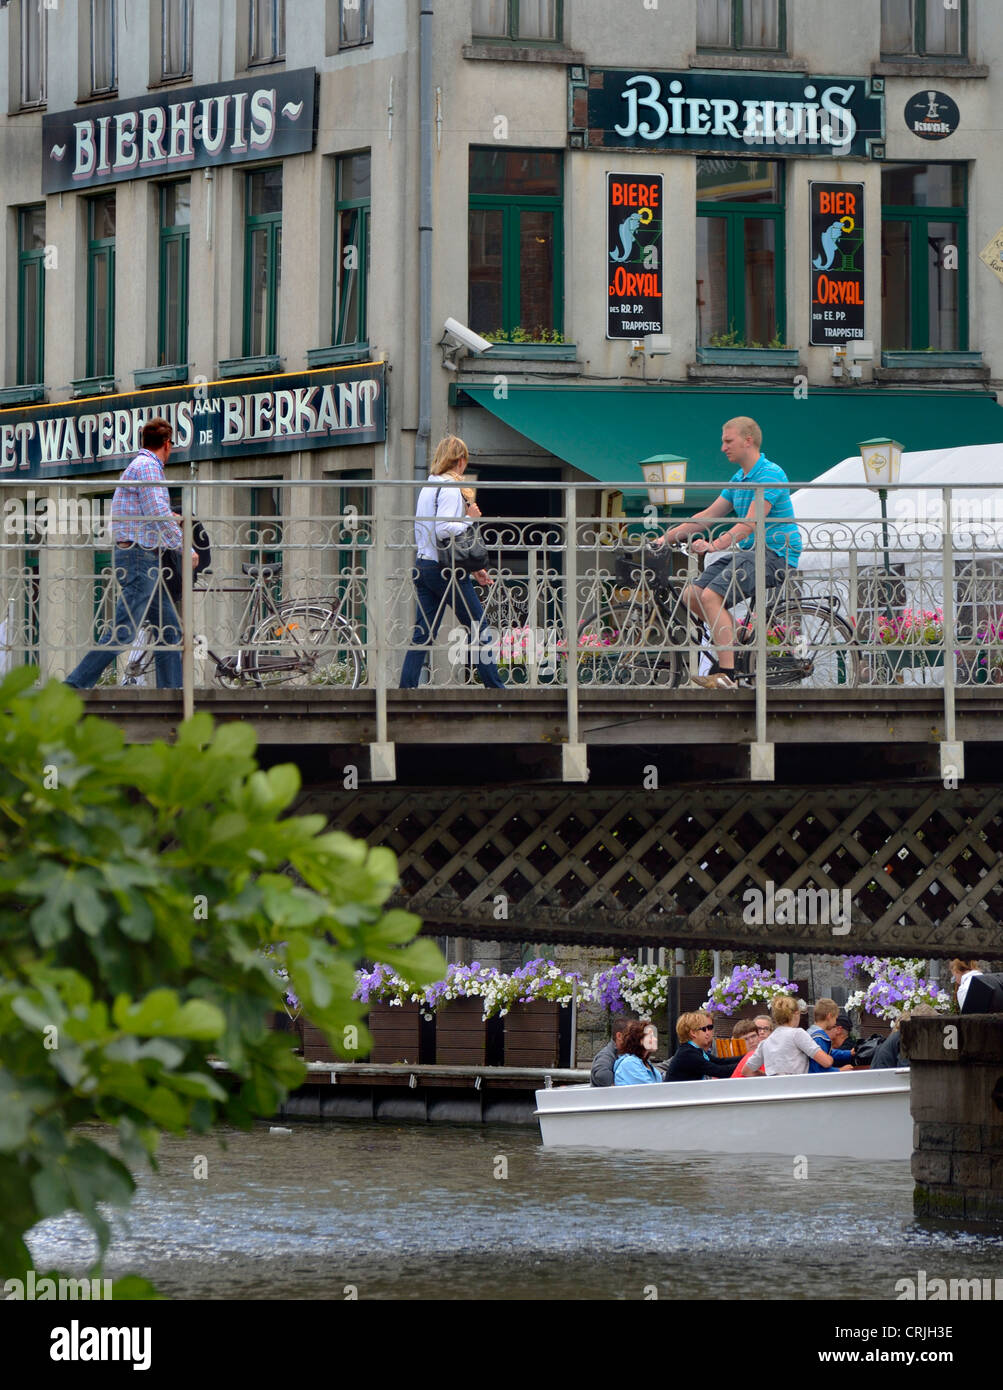 Ghent / Gent, Belgio. Persone attraversando ponte passando Bierhuis / Beer House Foto Stock